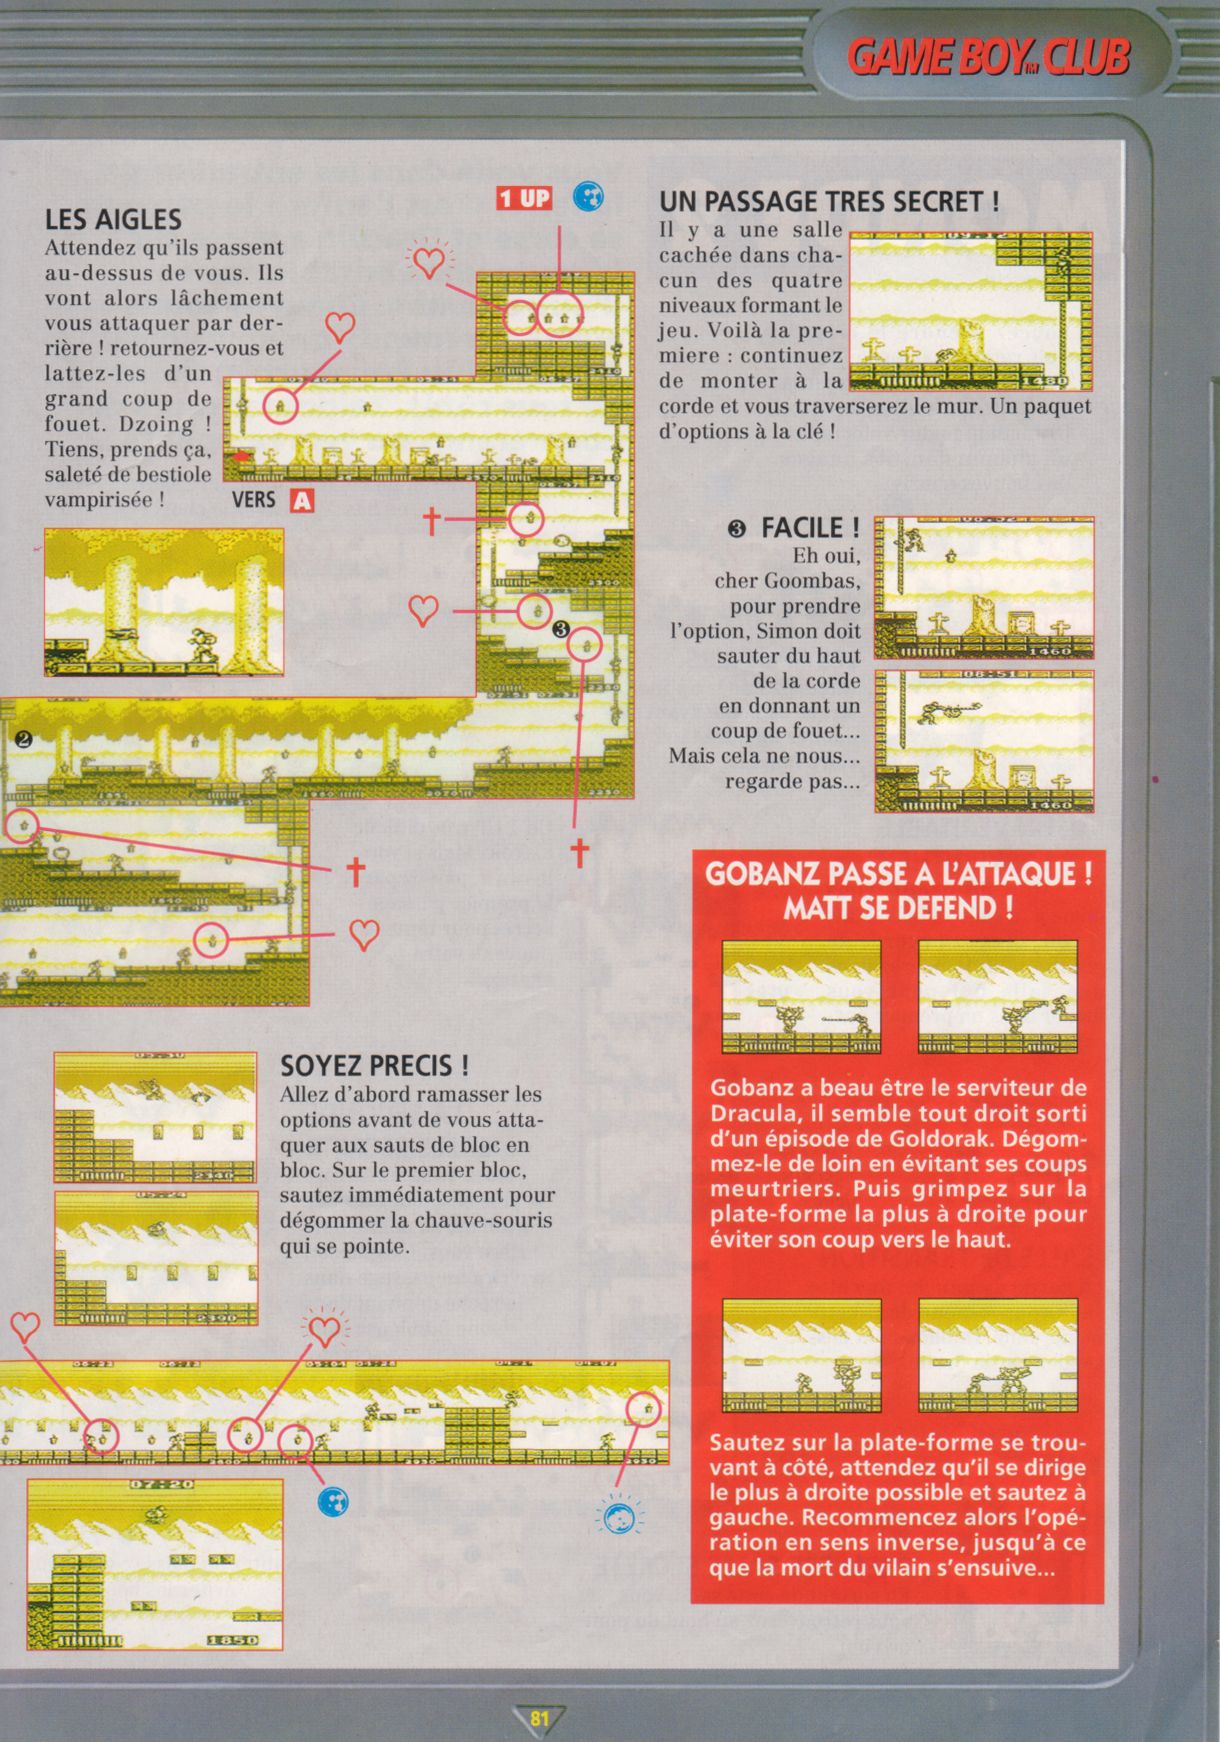 tests//683/Nintendo Player 003 - Page 081 (1992-03-04).jpg